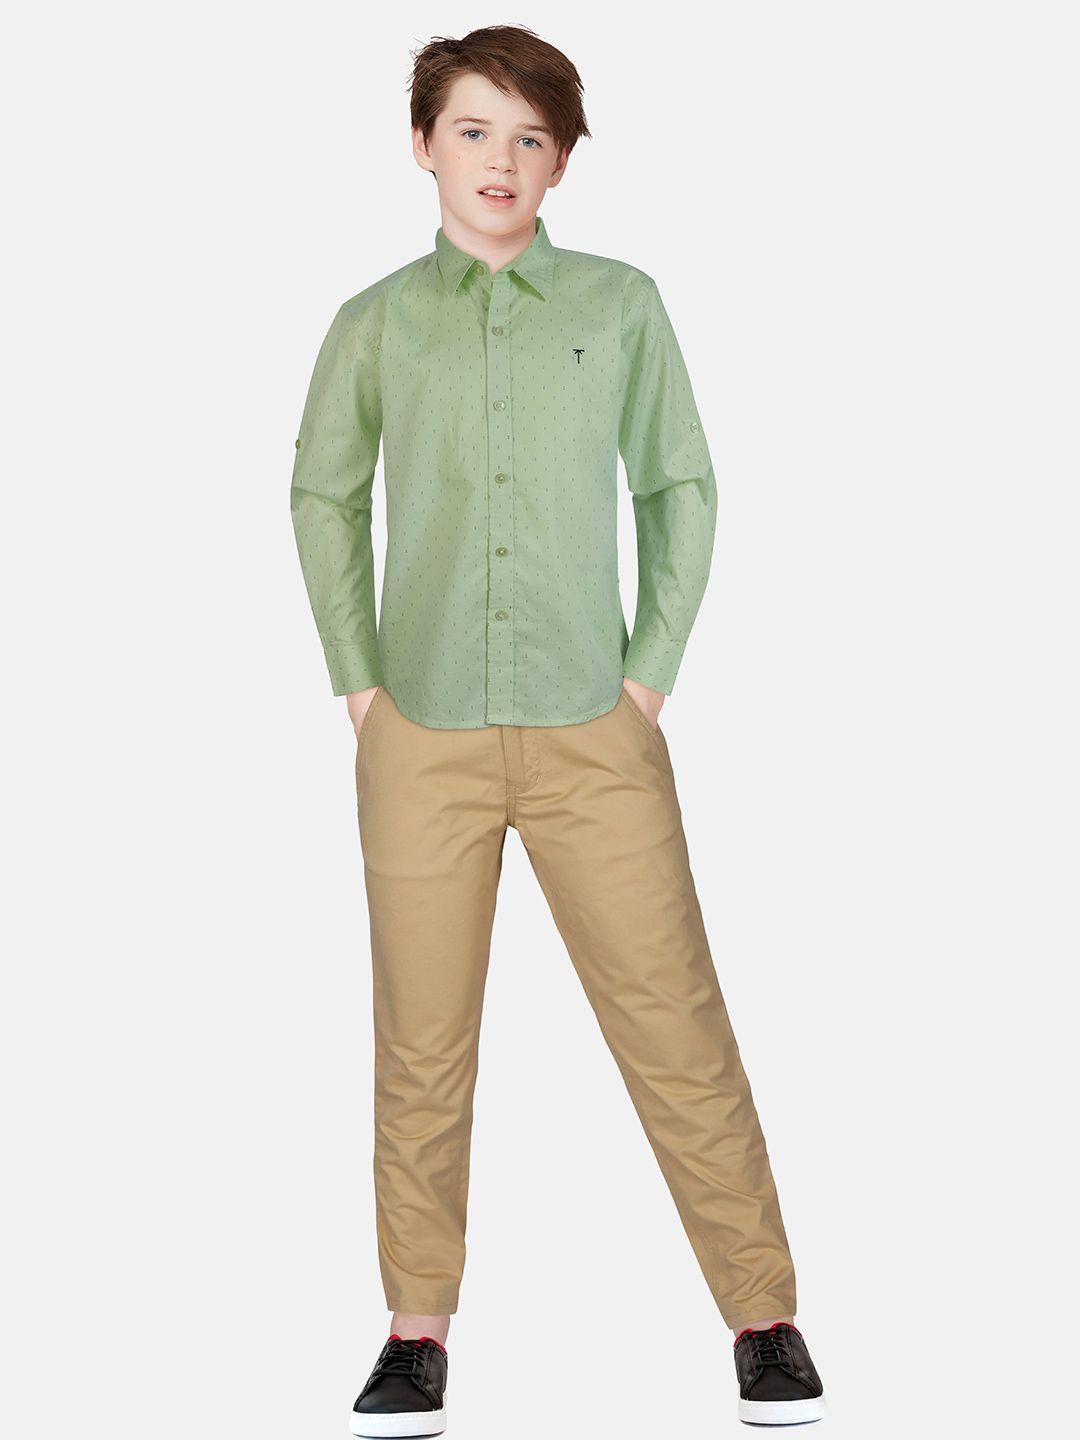 palm tree boys green printed casual shirt